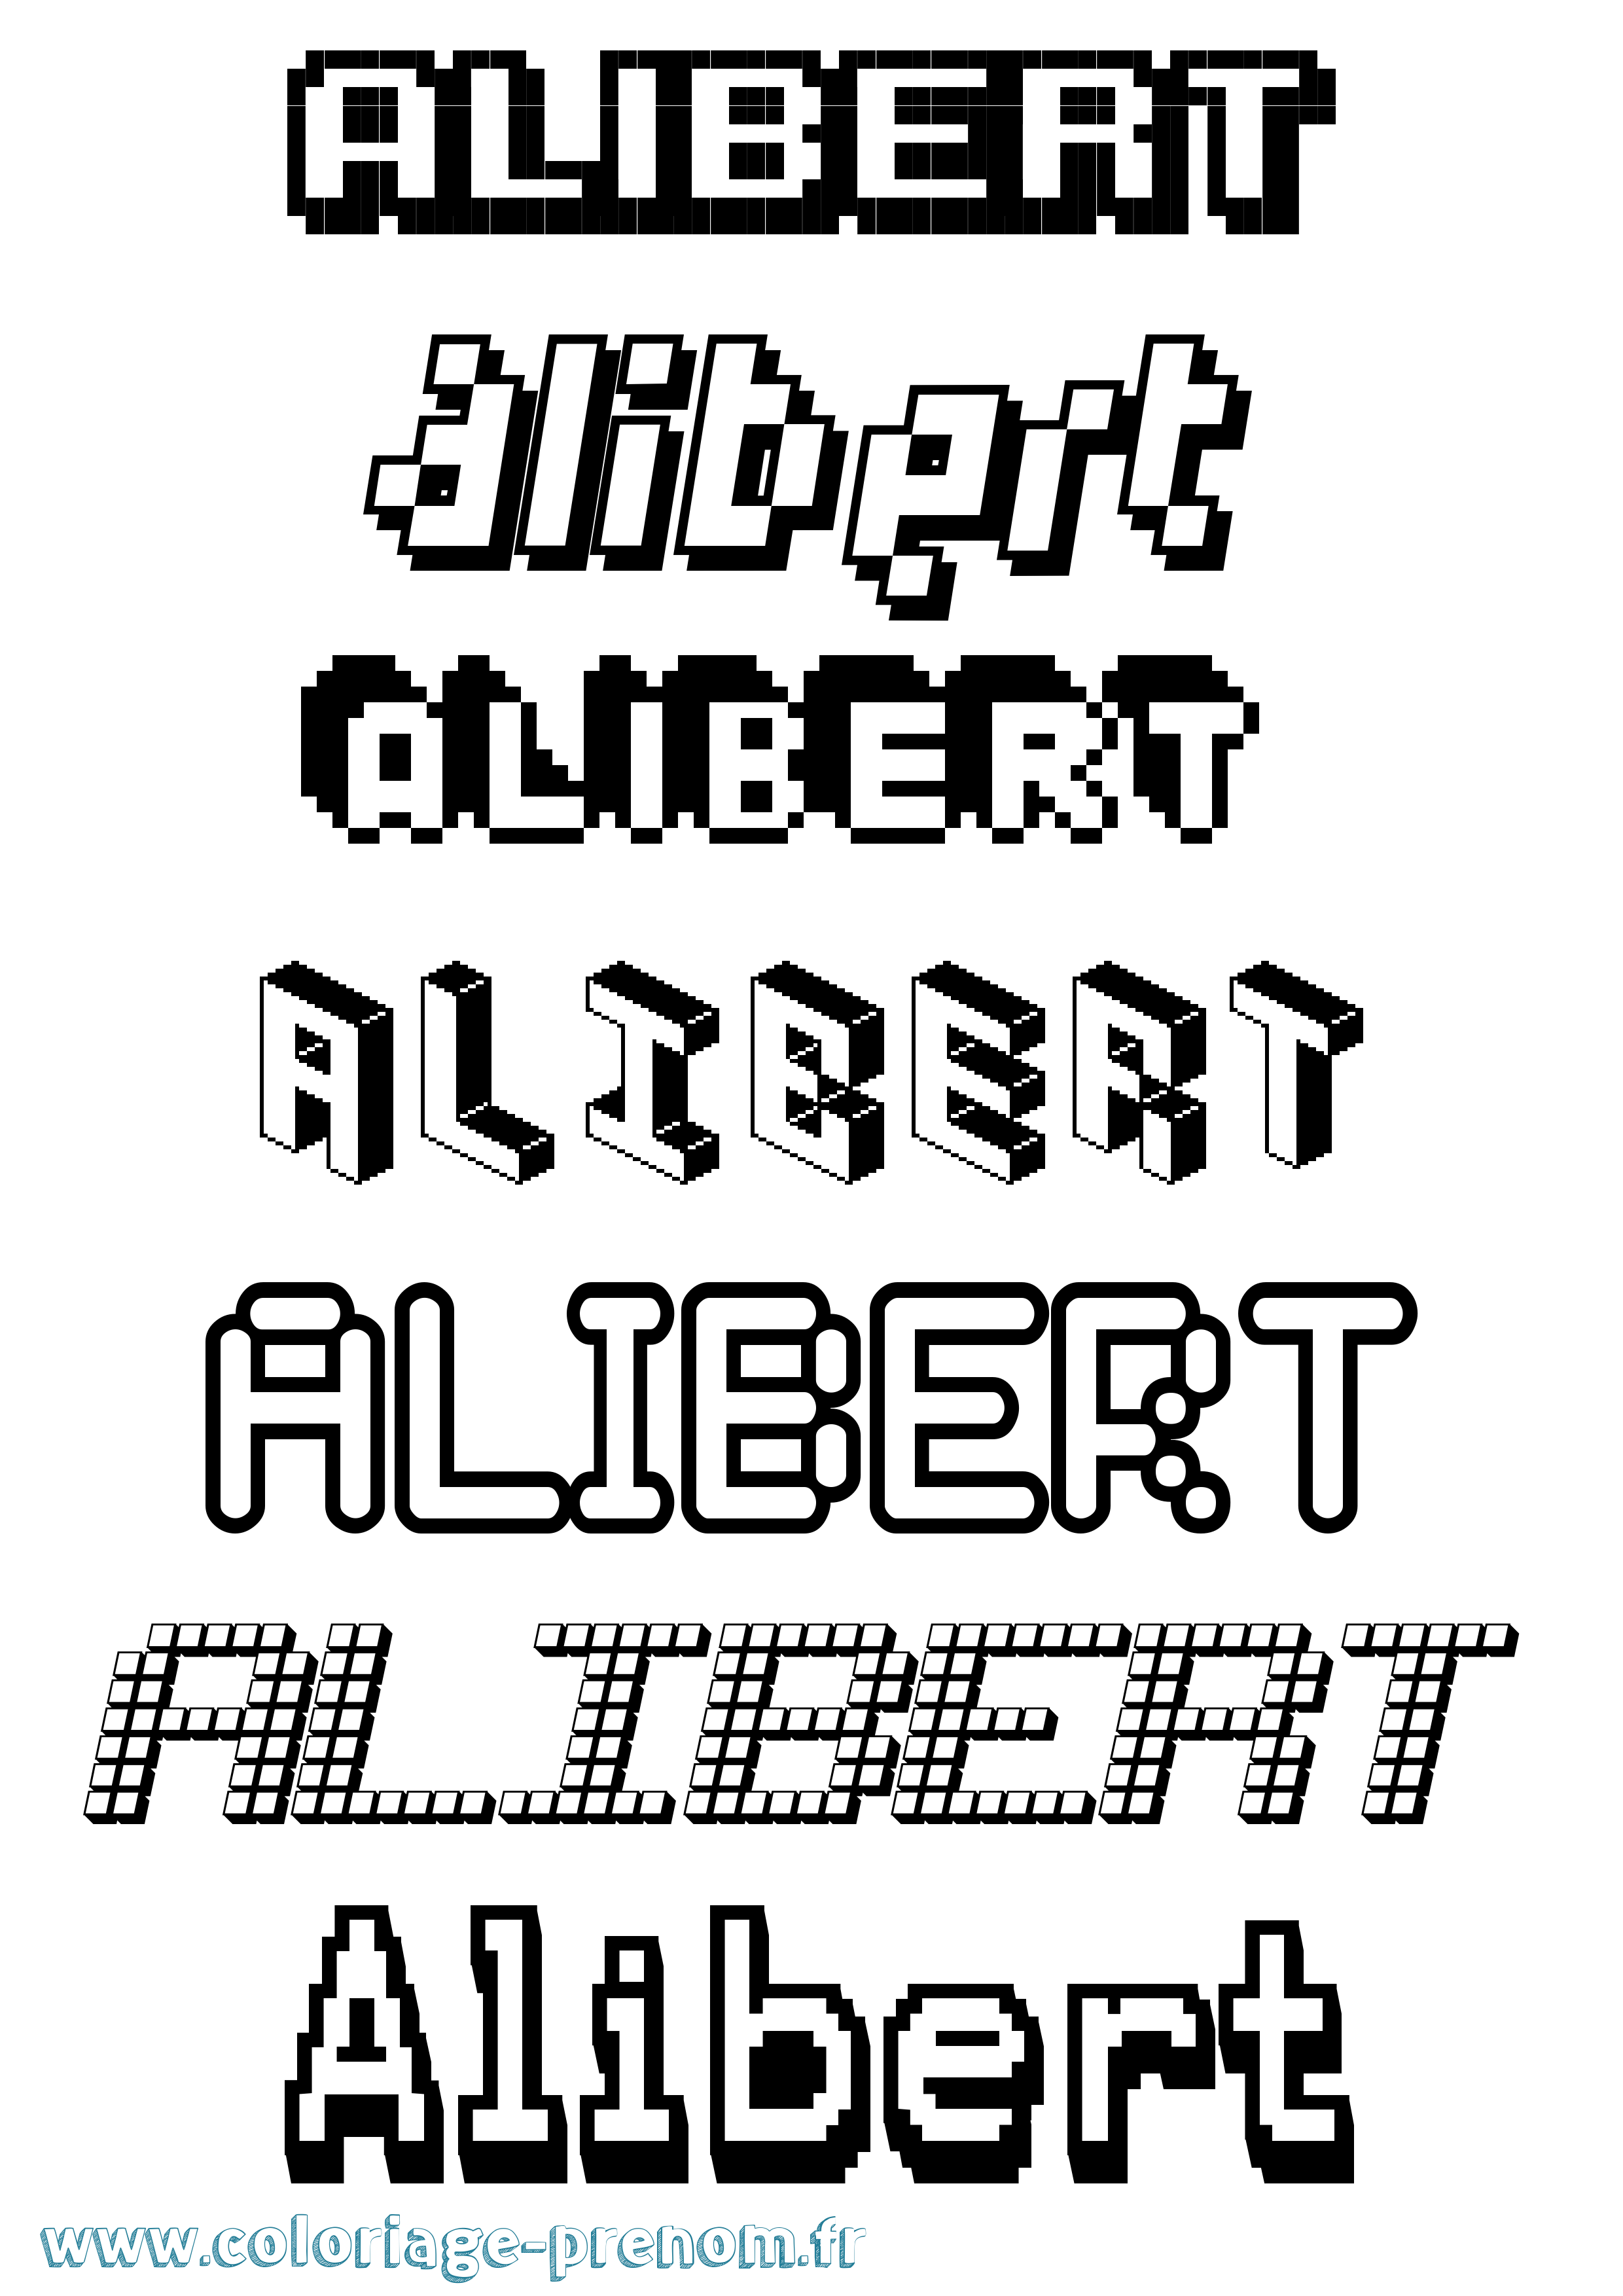 Coloriage prénom Alibert Pixel